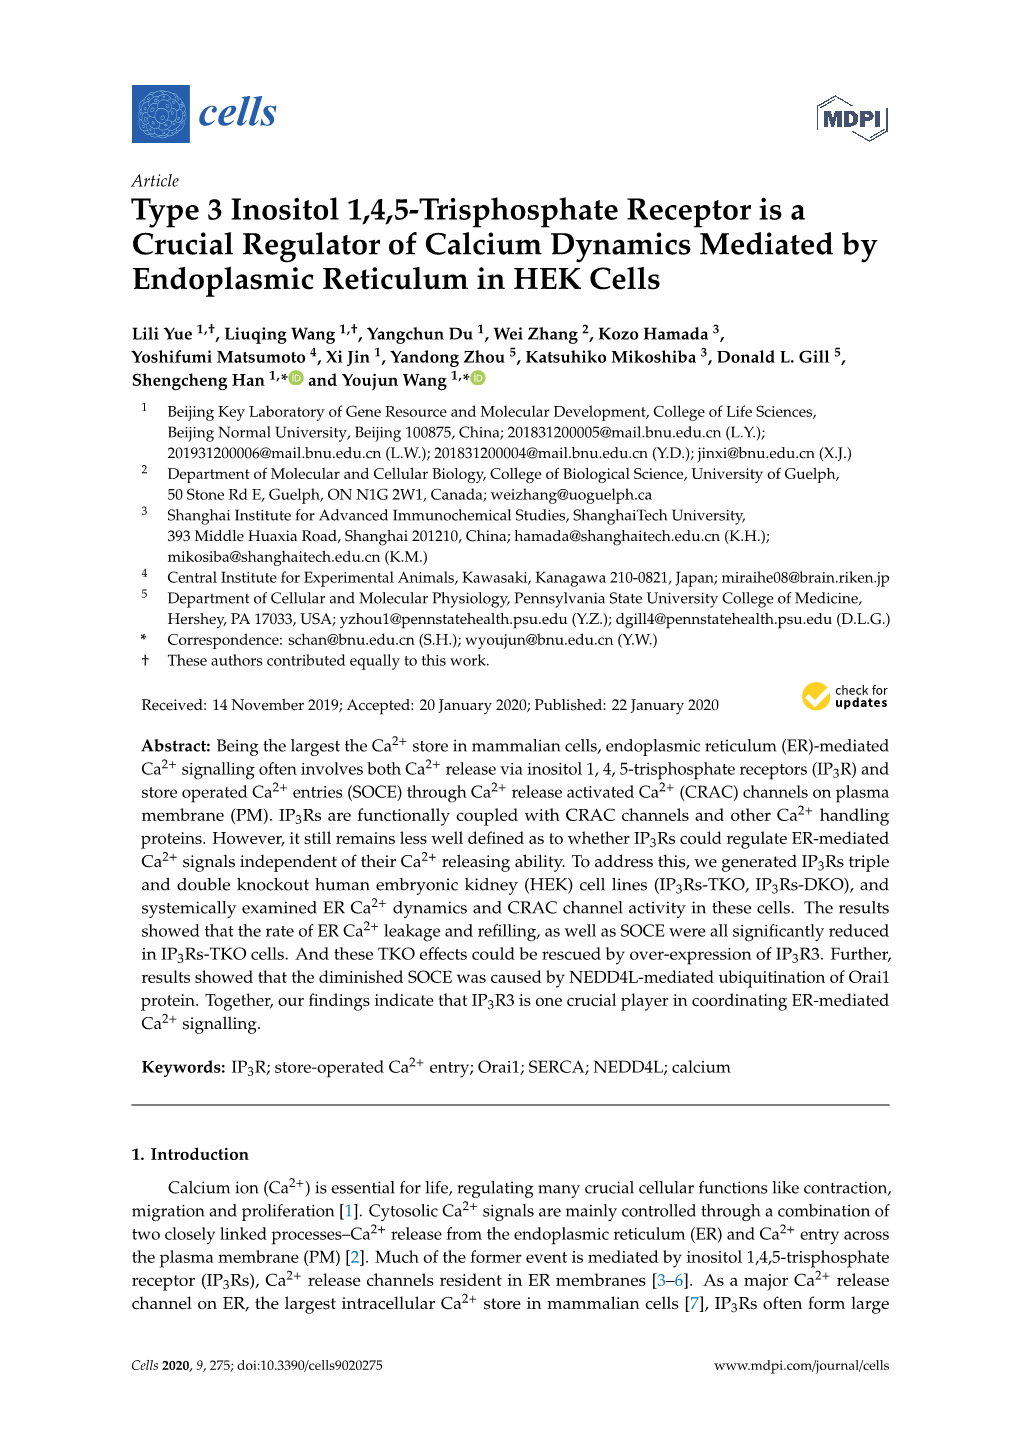 Type 3 Inositol 1,4,5-Trisphosphate Receptor Is a Crucial Regulator of Calcium Dynamics Mediated by Endoplasmic Reticulum in HEK Cells